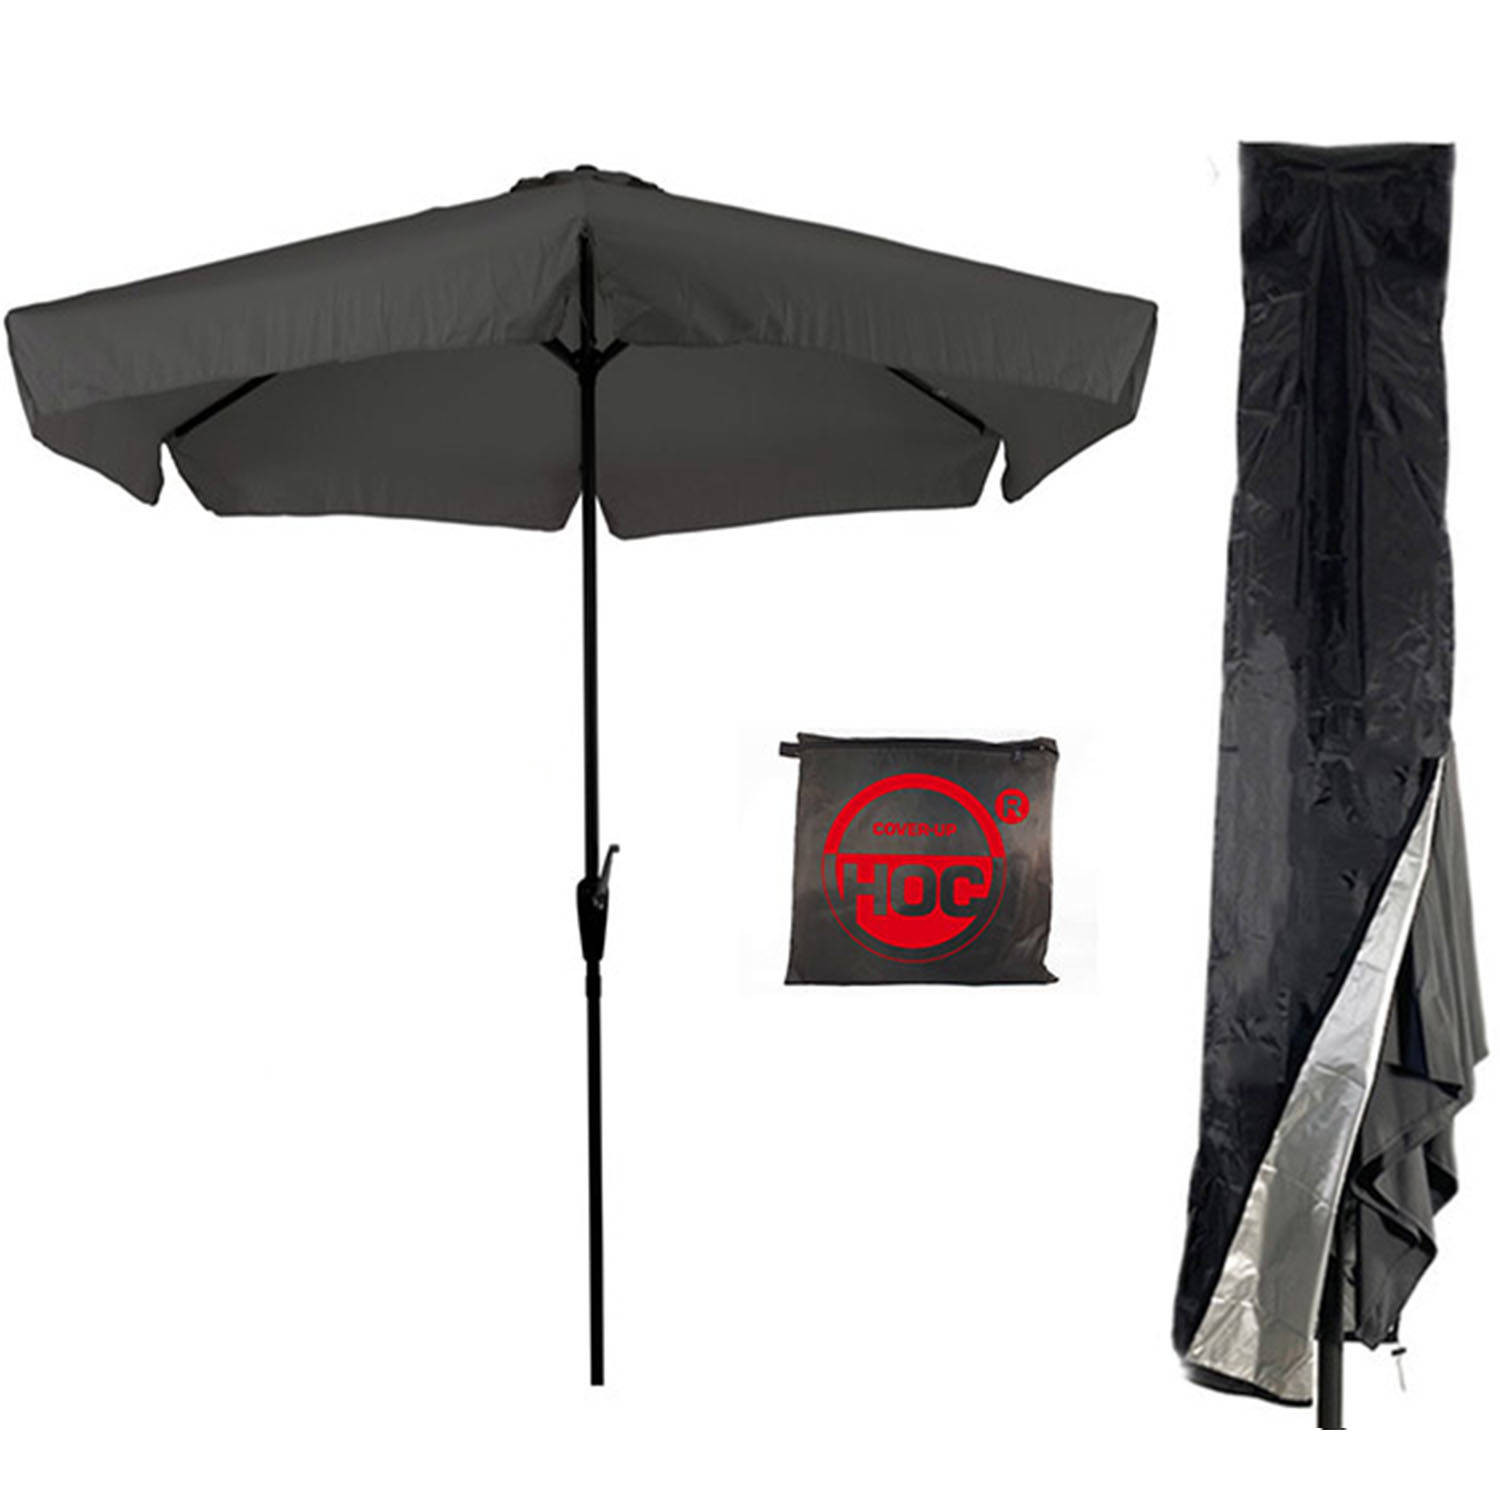 CUHOC Parasol - Grijs - Antraciete Parasol met hoes - 3m - Stokparasol - Grijze parasol met Redlabel Parasol hoes